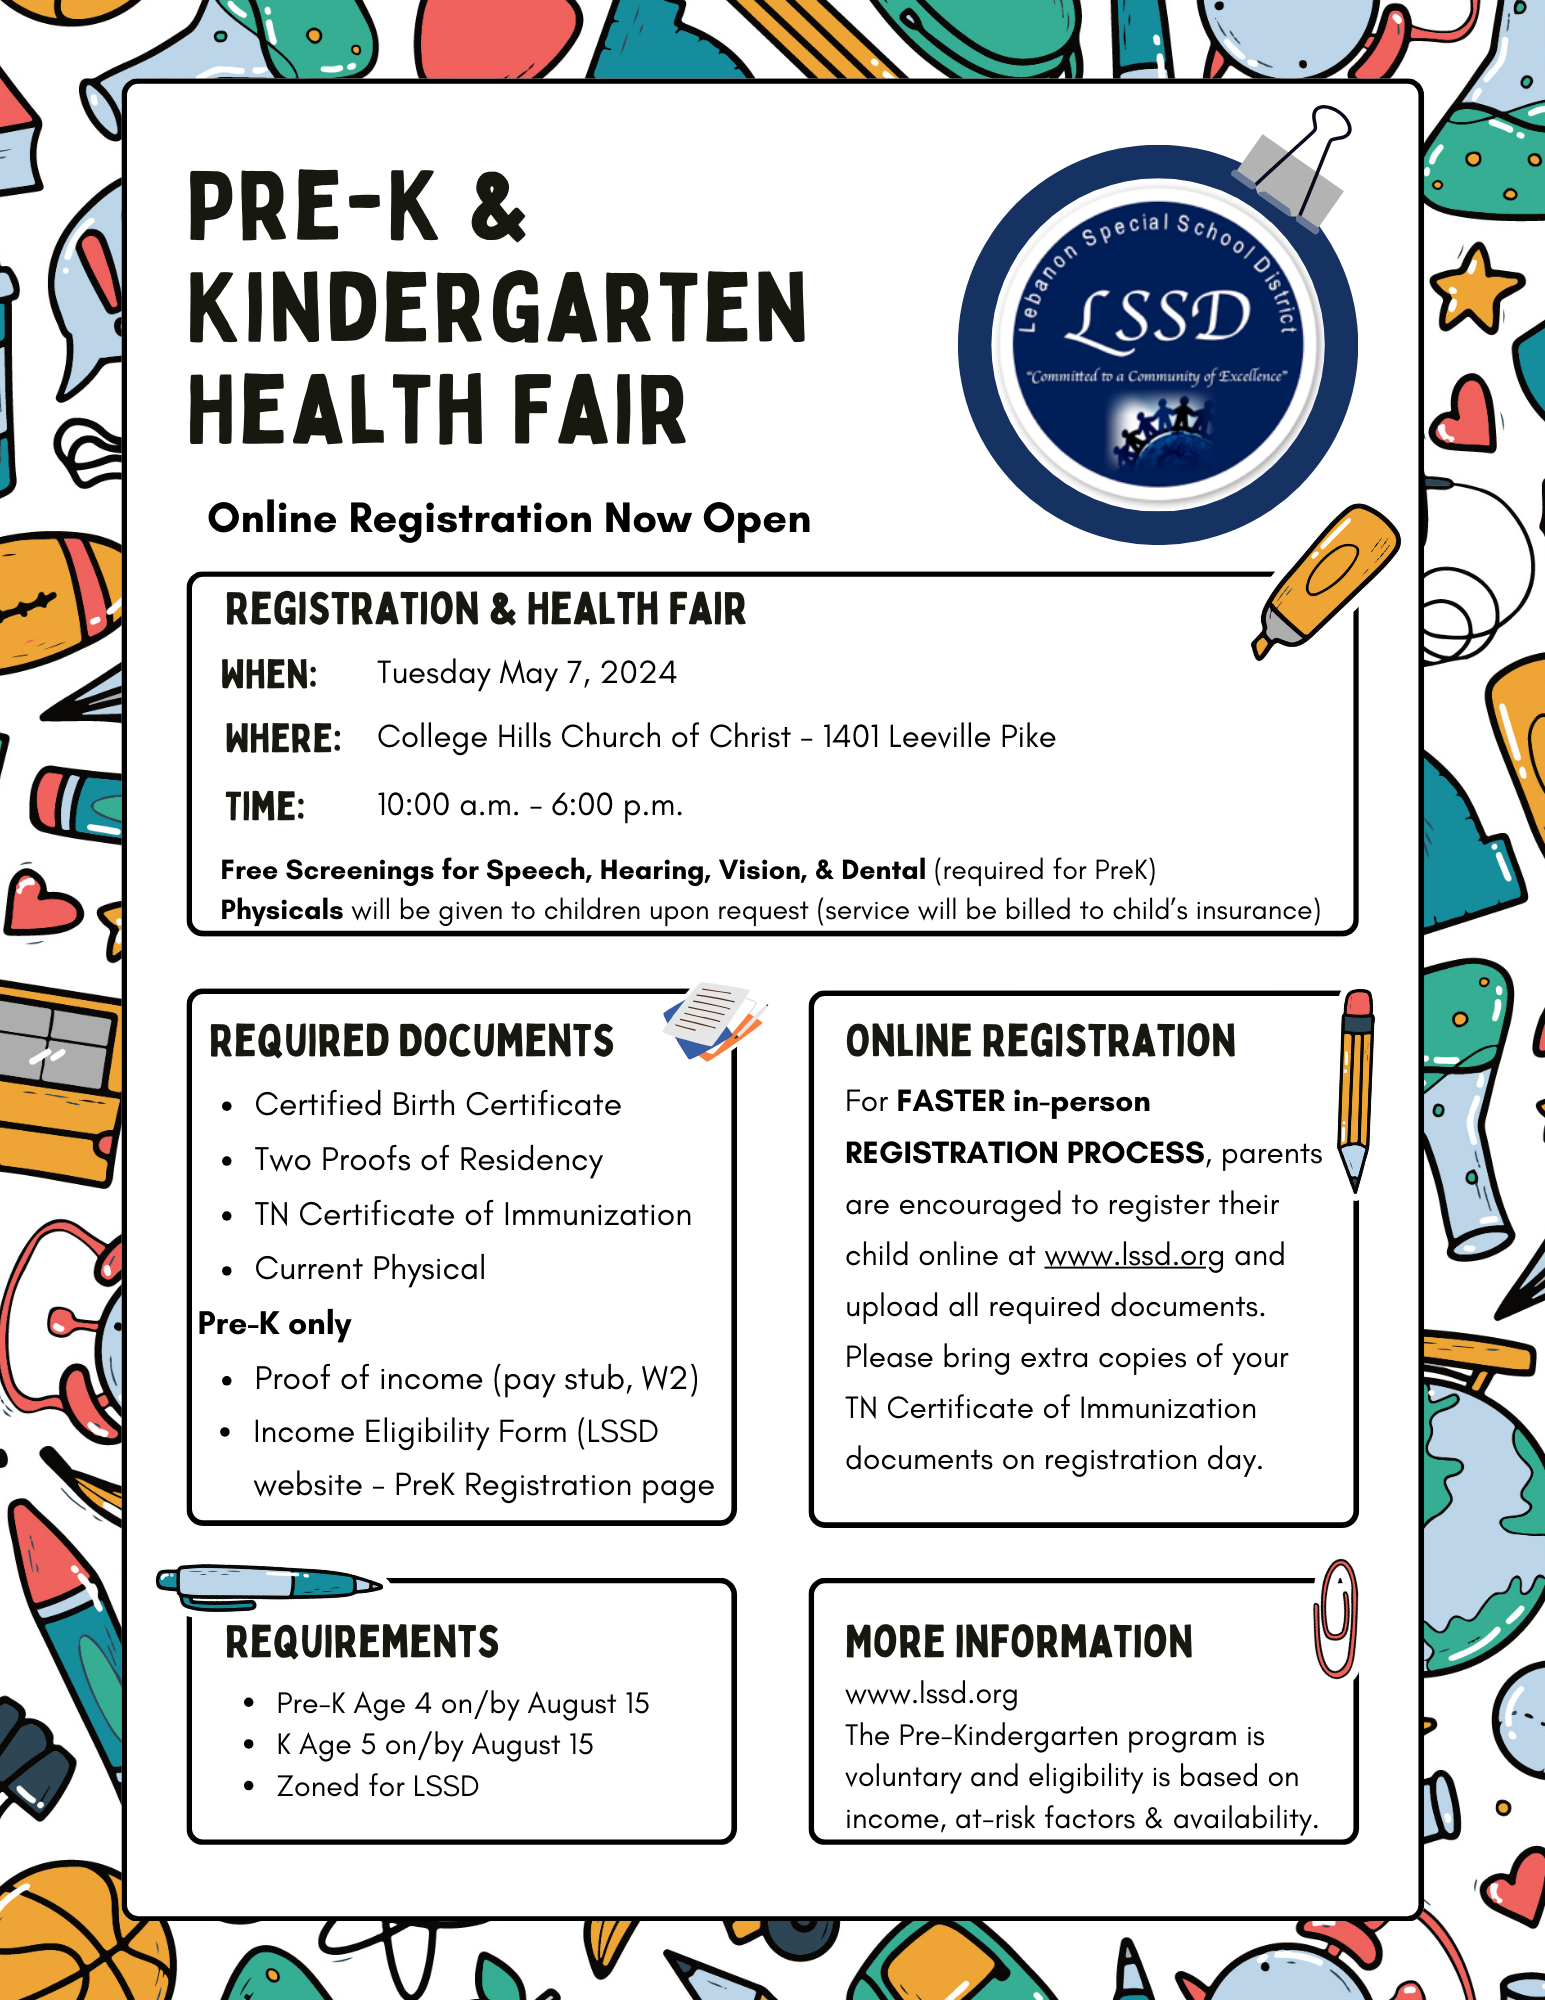 Pre-K & Kindergarten Registration Information Flyer